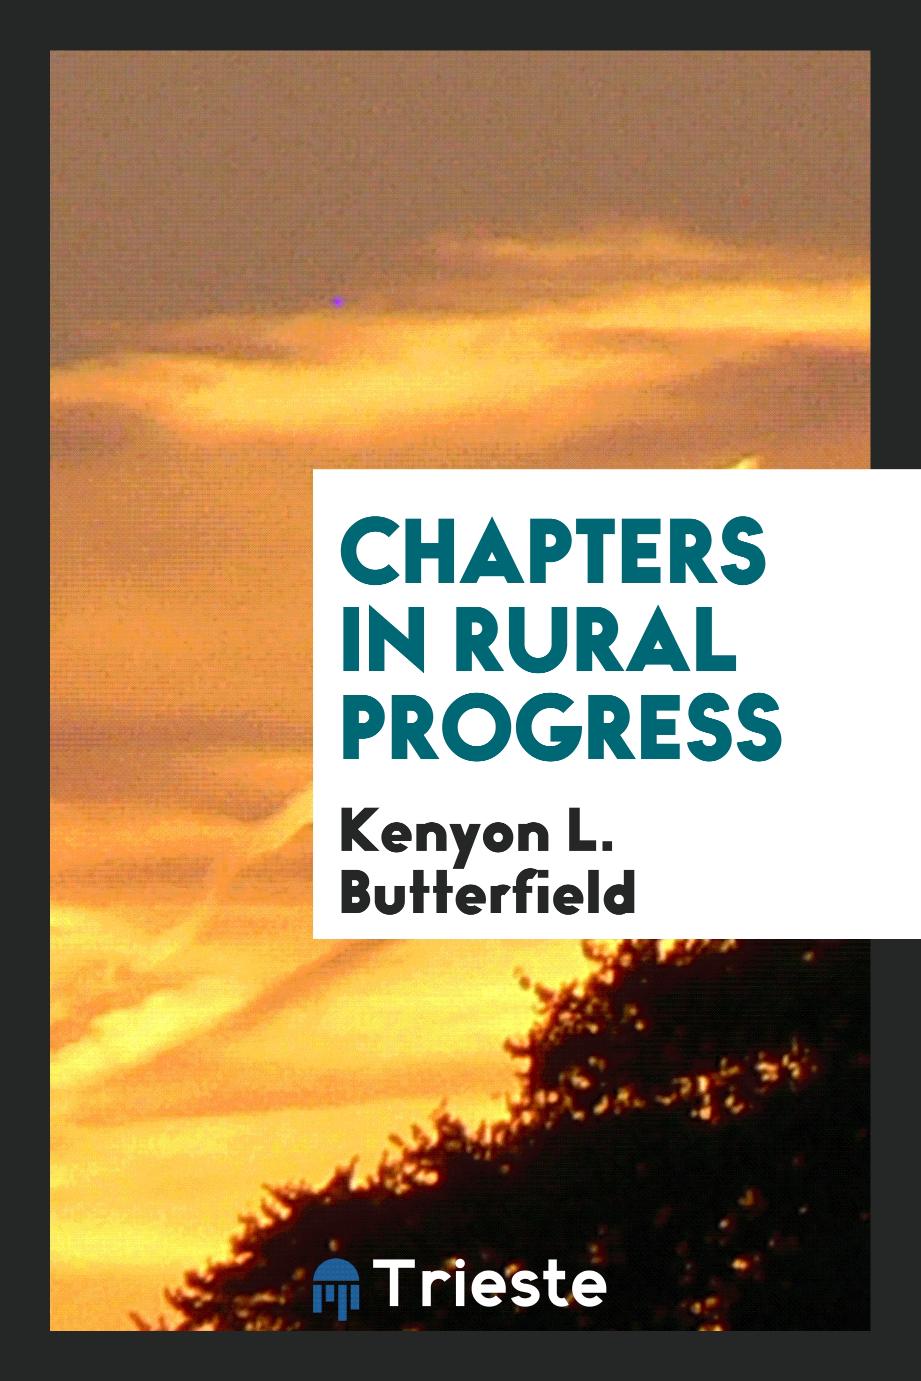 Chapters in rural progress